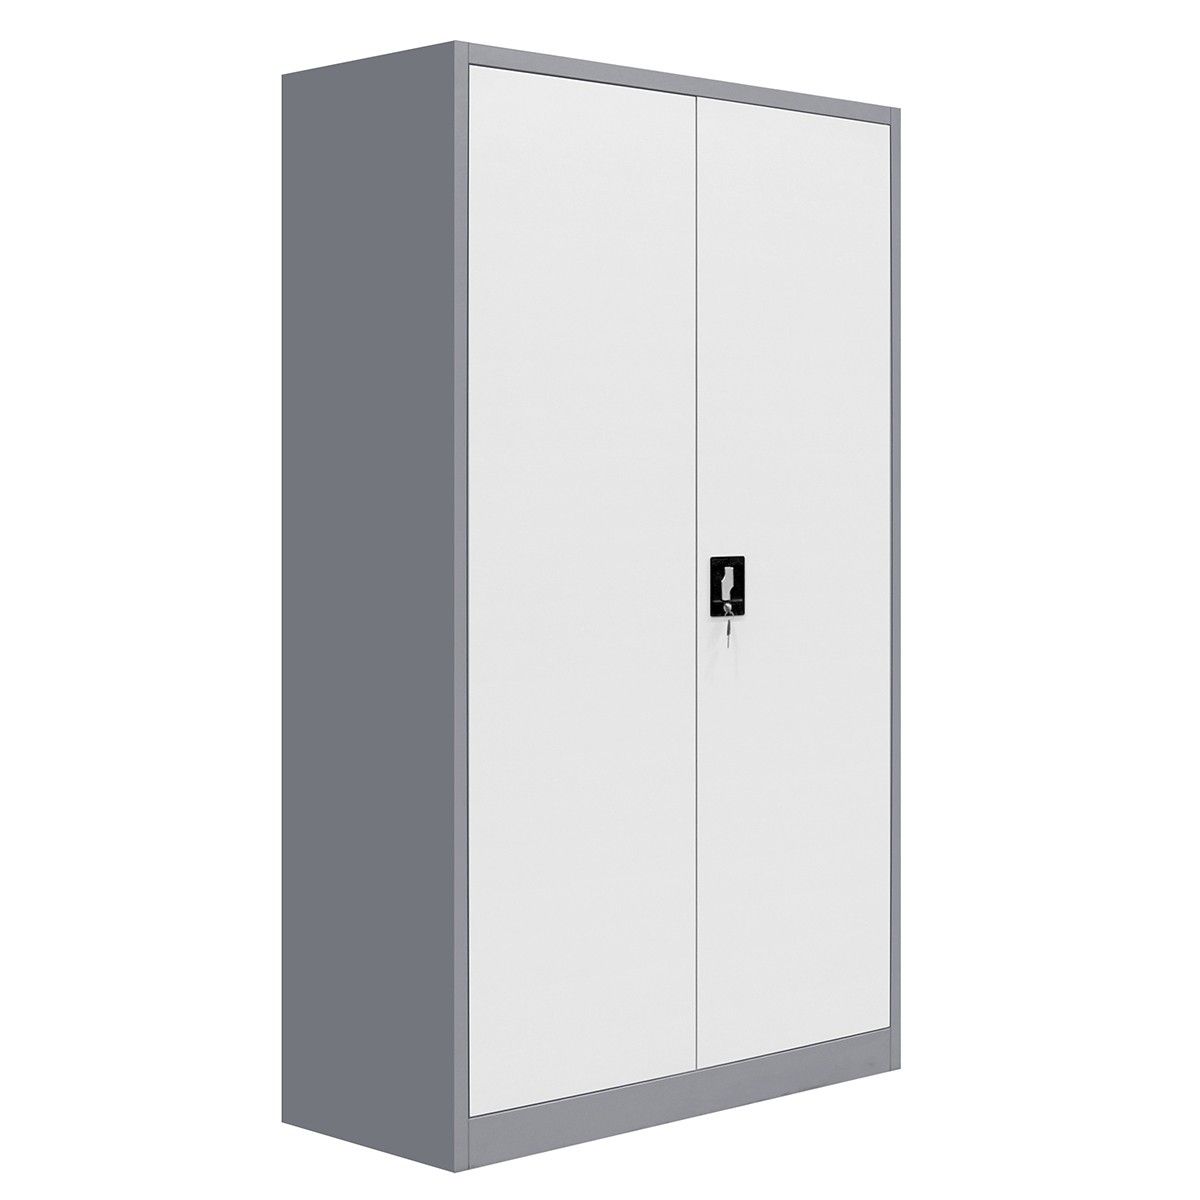 Steel Storage Cabinet Wardrobe Closet With A Lock Door Buy